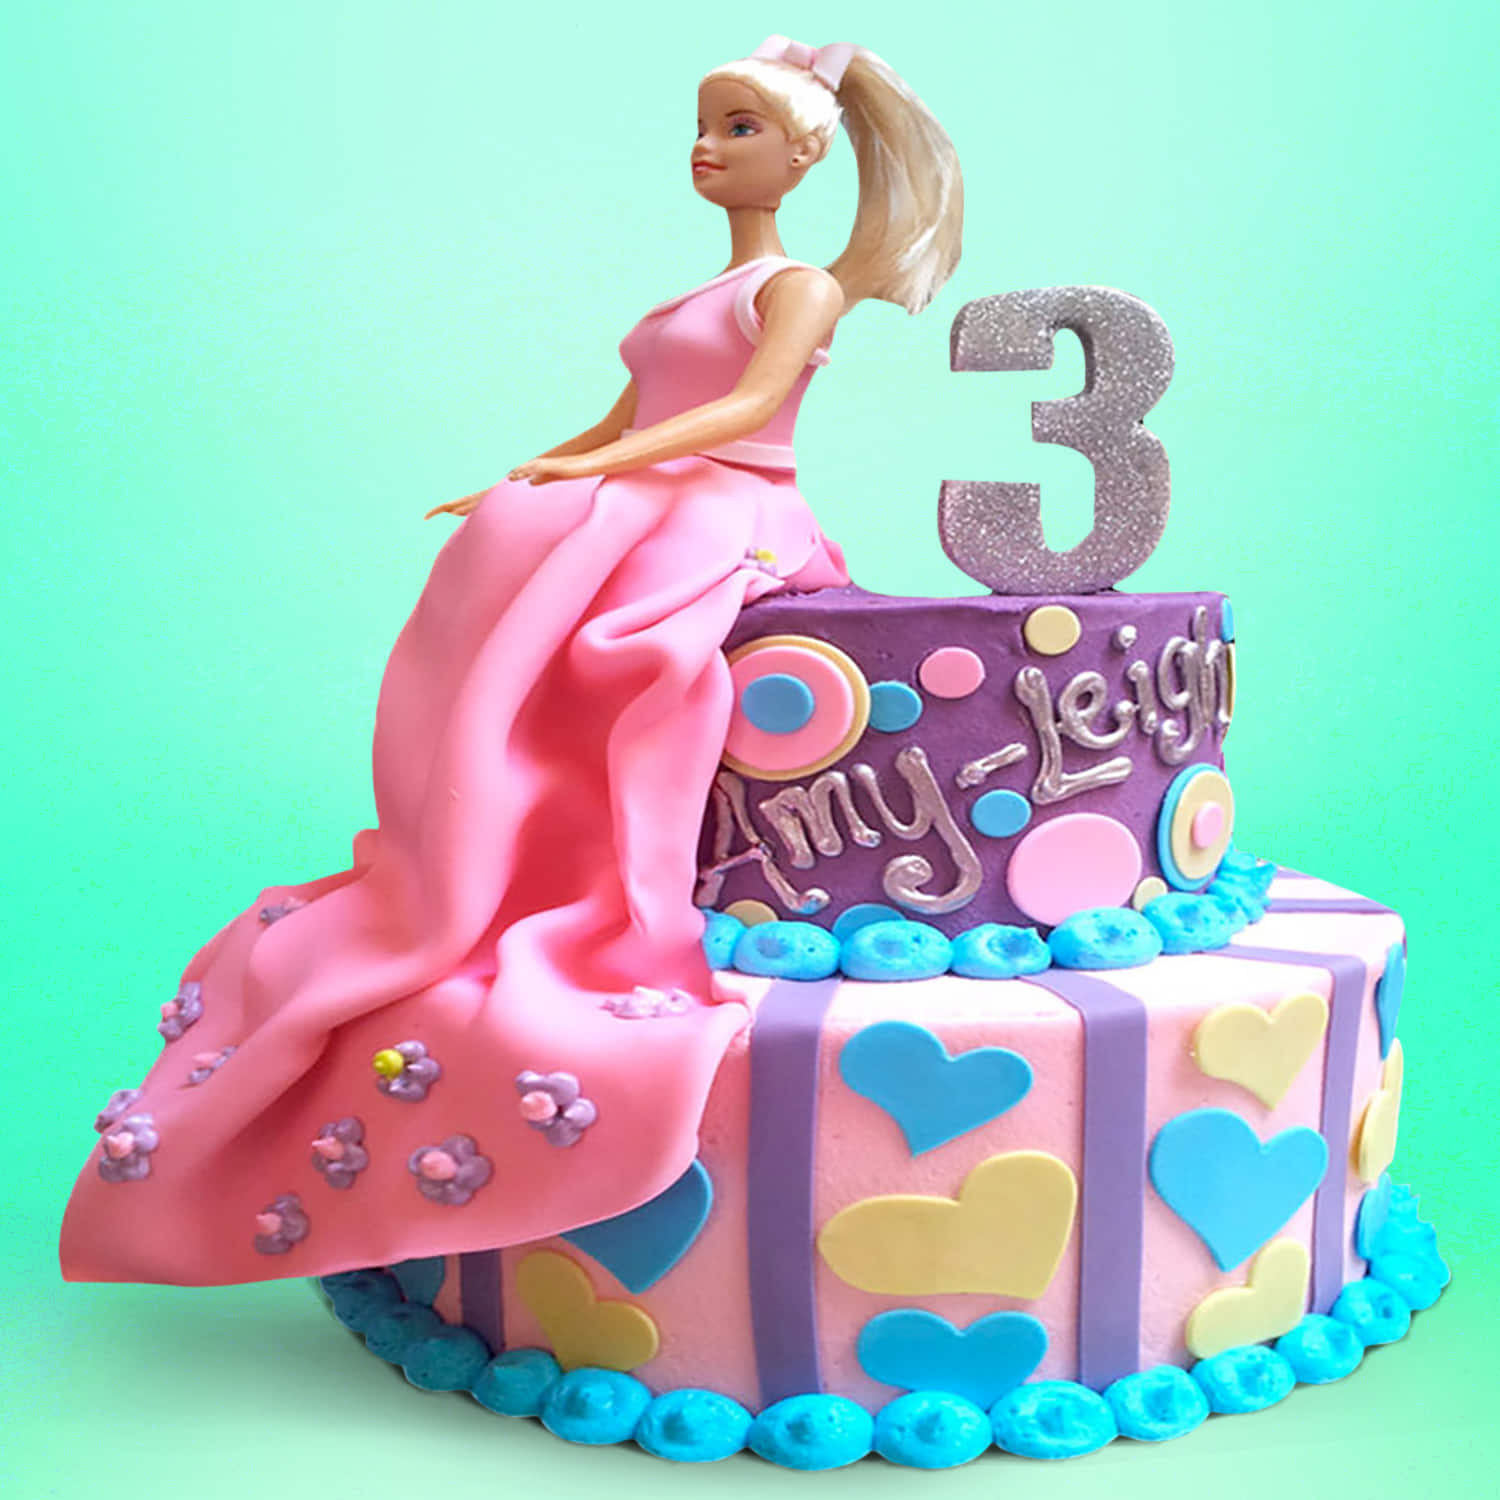 Sleeping Beauty Birthday Cake - CakeCentral.com